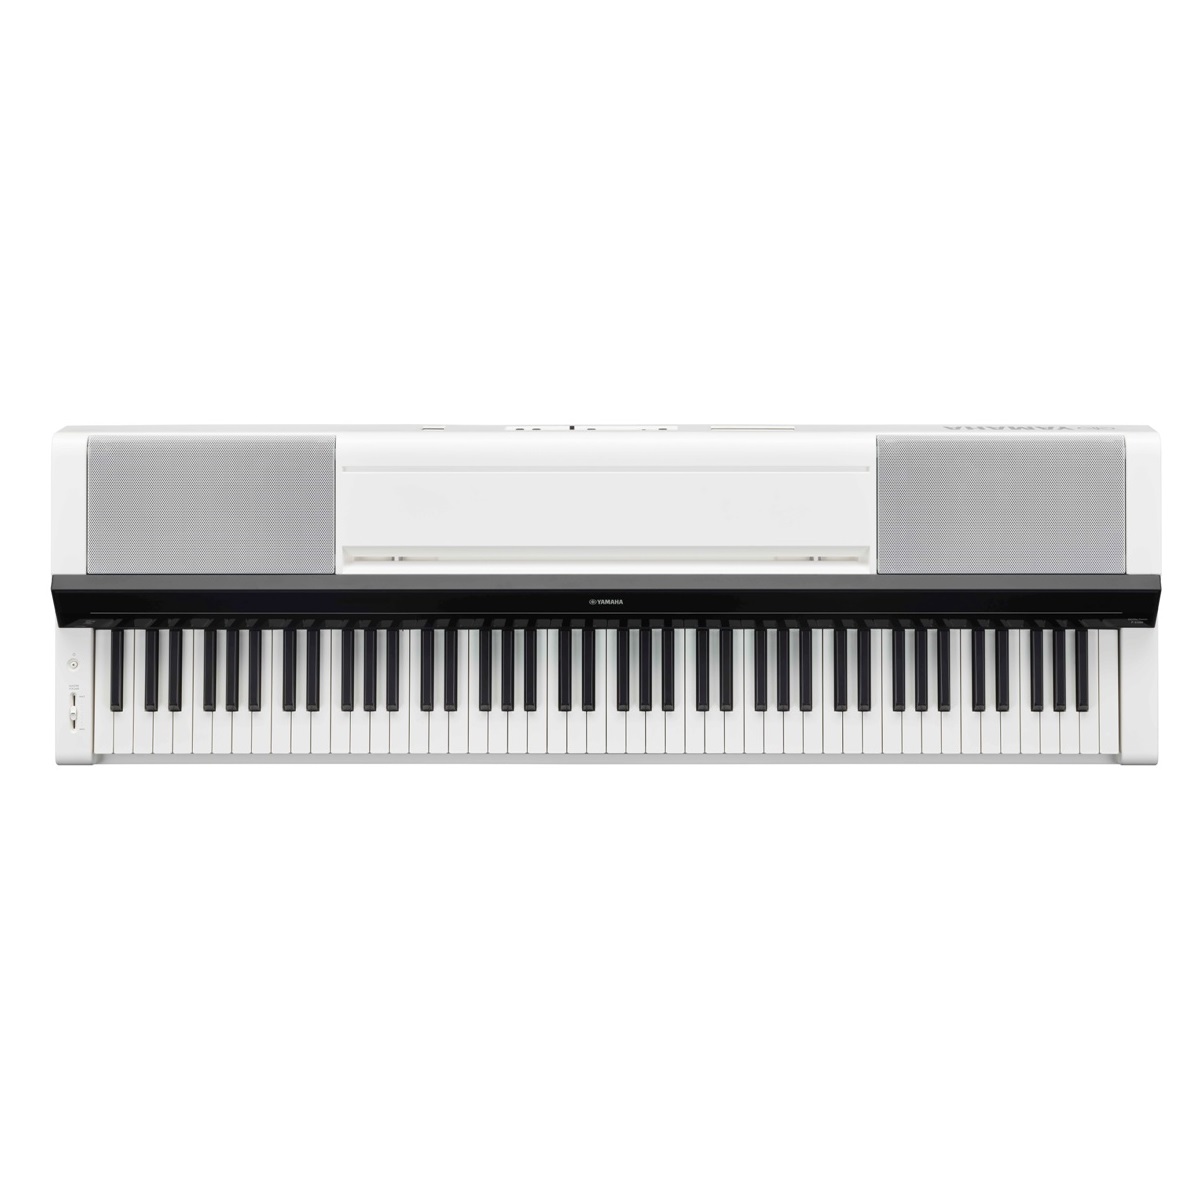 YAMAHA P-S500 W PIANOFORTE DIGITALE BIANCO 88 TASTI PESATI 1